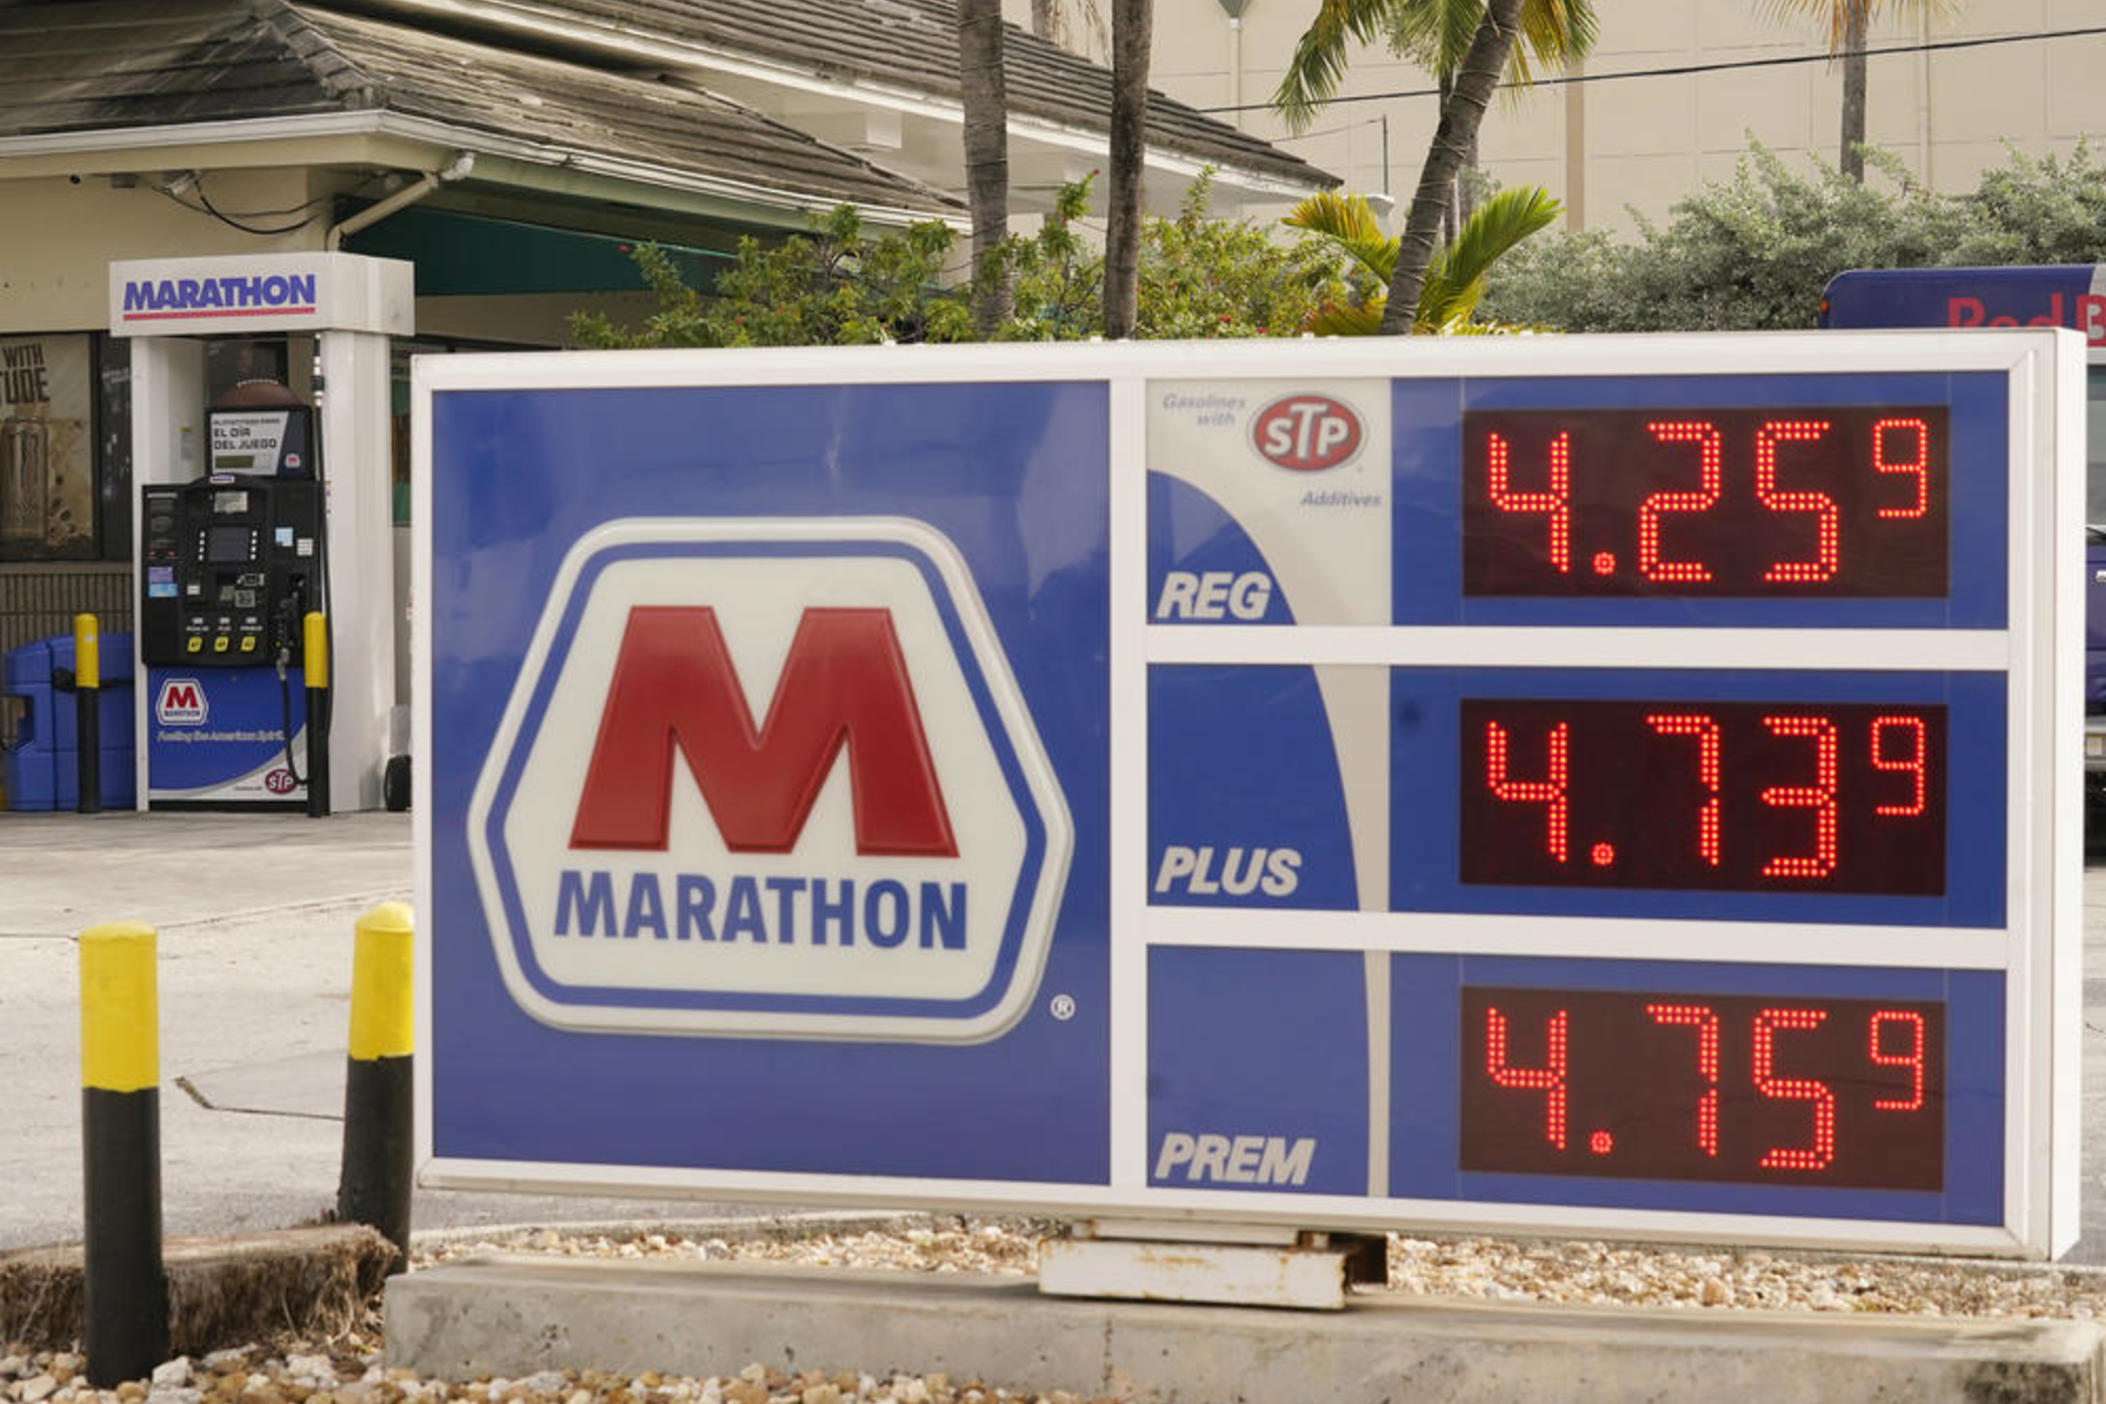 Gasoline prices are displayed at a Marathon station, Wednesday, Nov. 17, 2021, in Miami Beach, Fla.